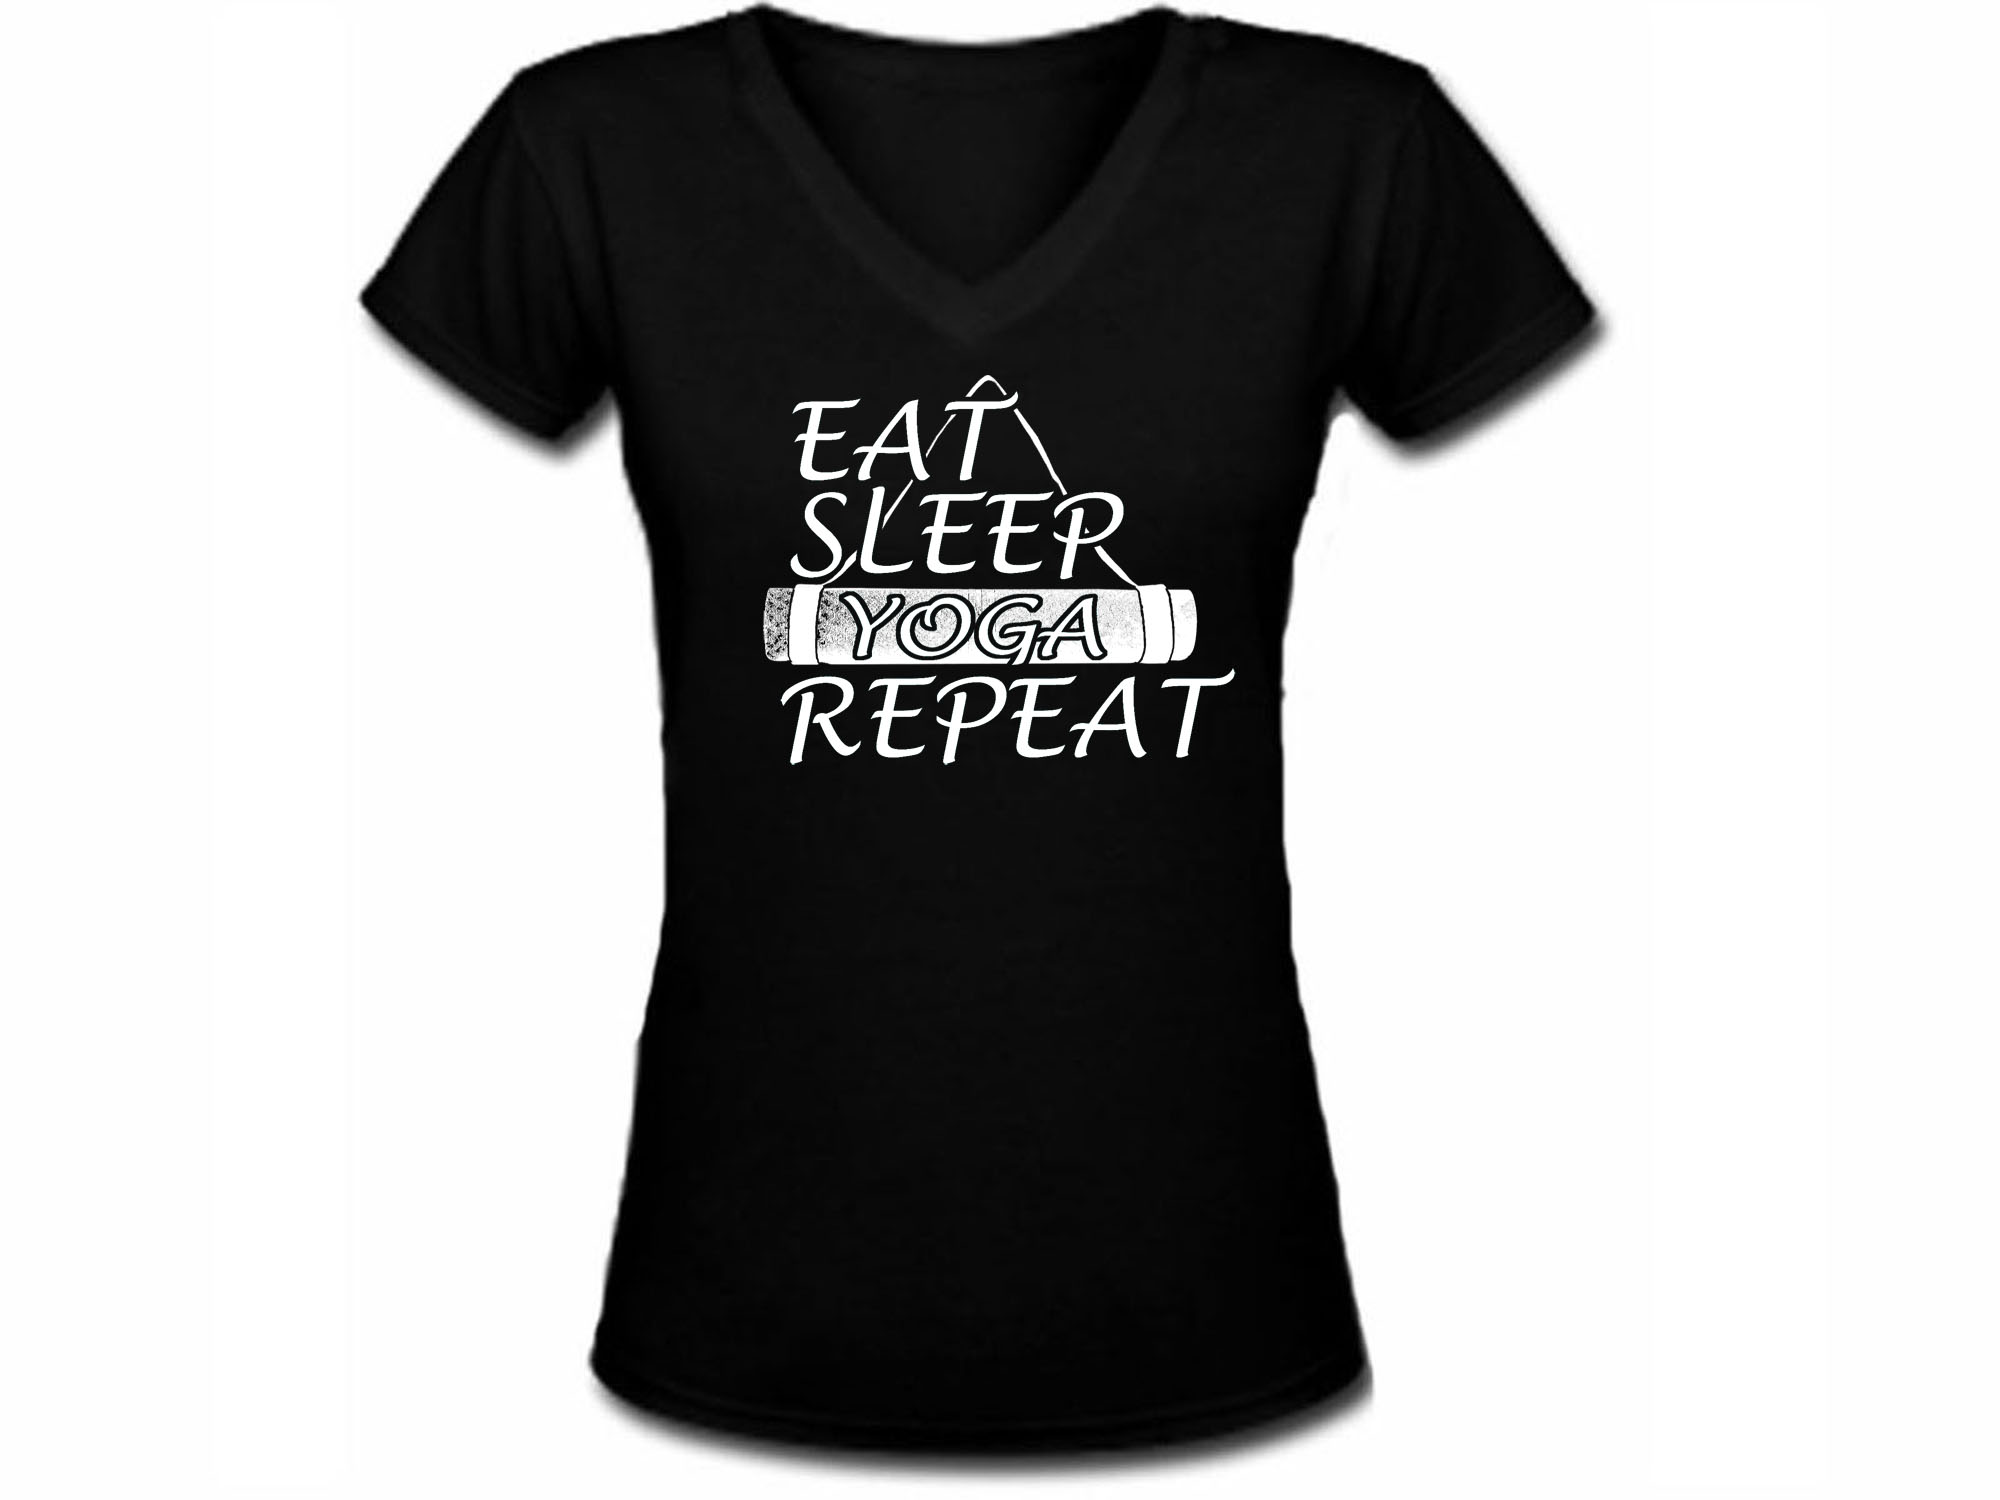 Eat sleep yoga repeat black women graphic t-shirt